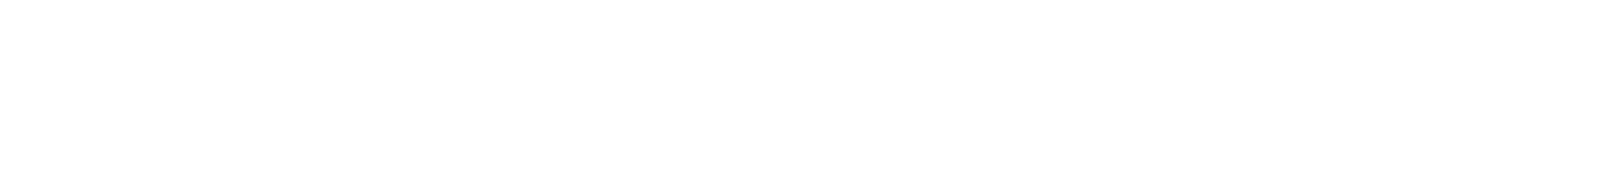 Tipografia Sol Grafica logo